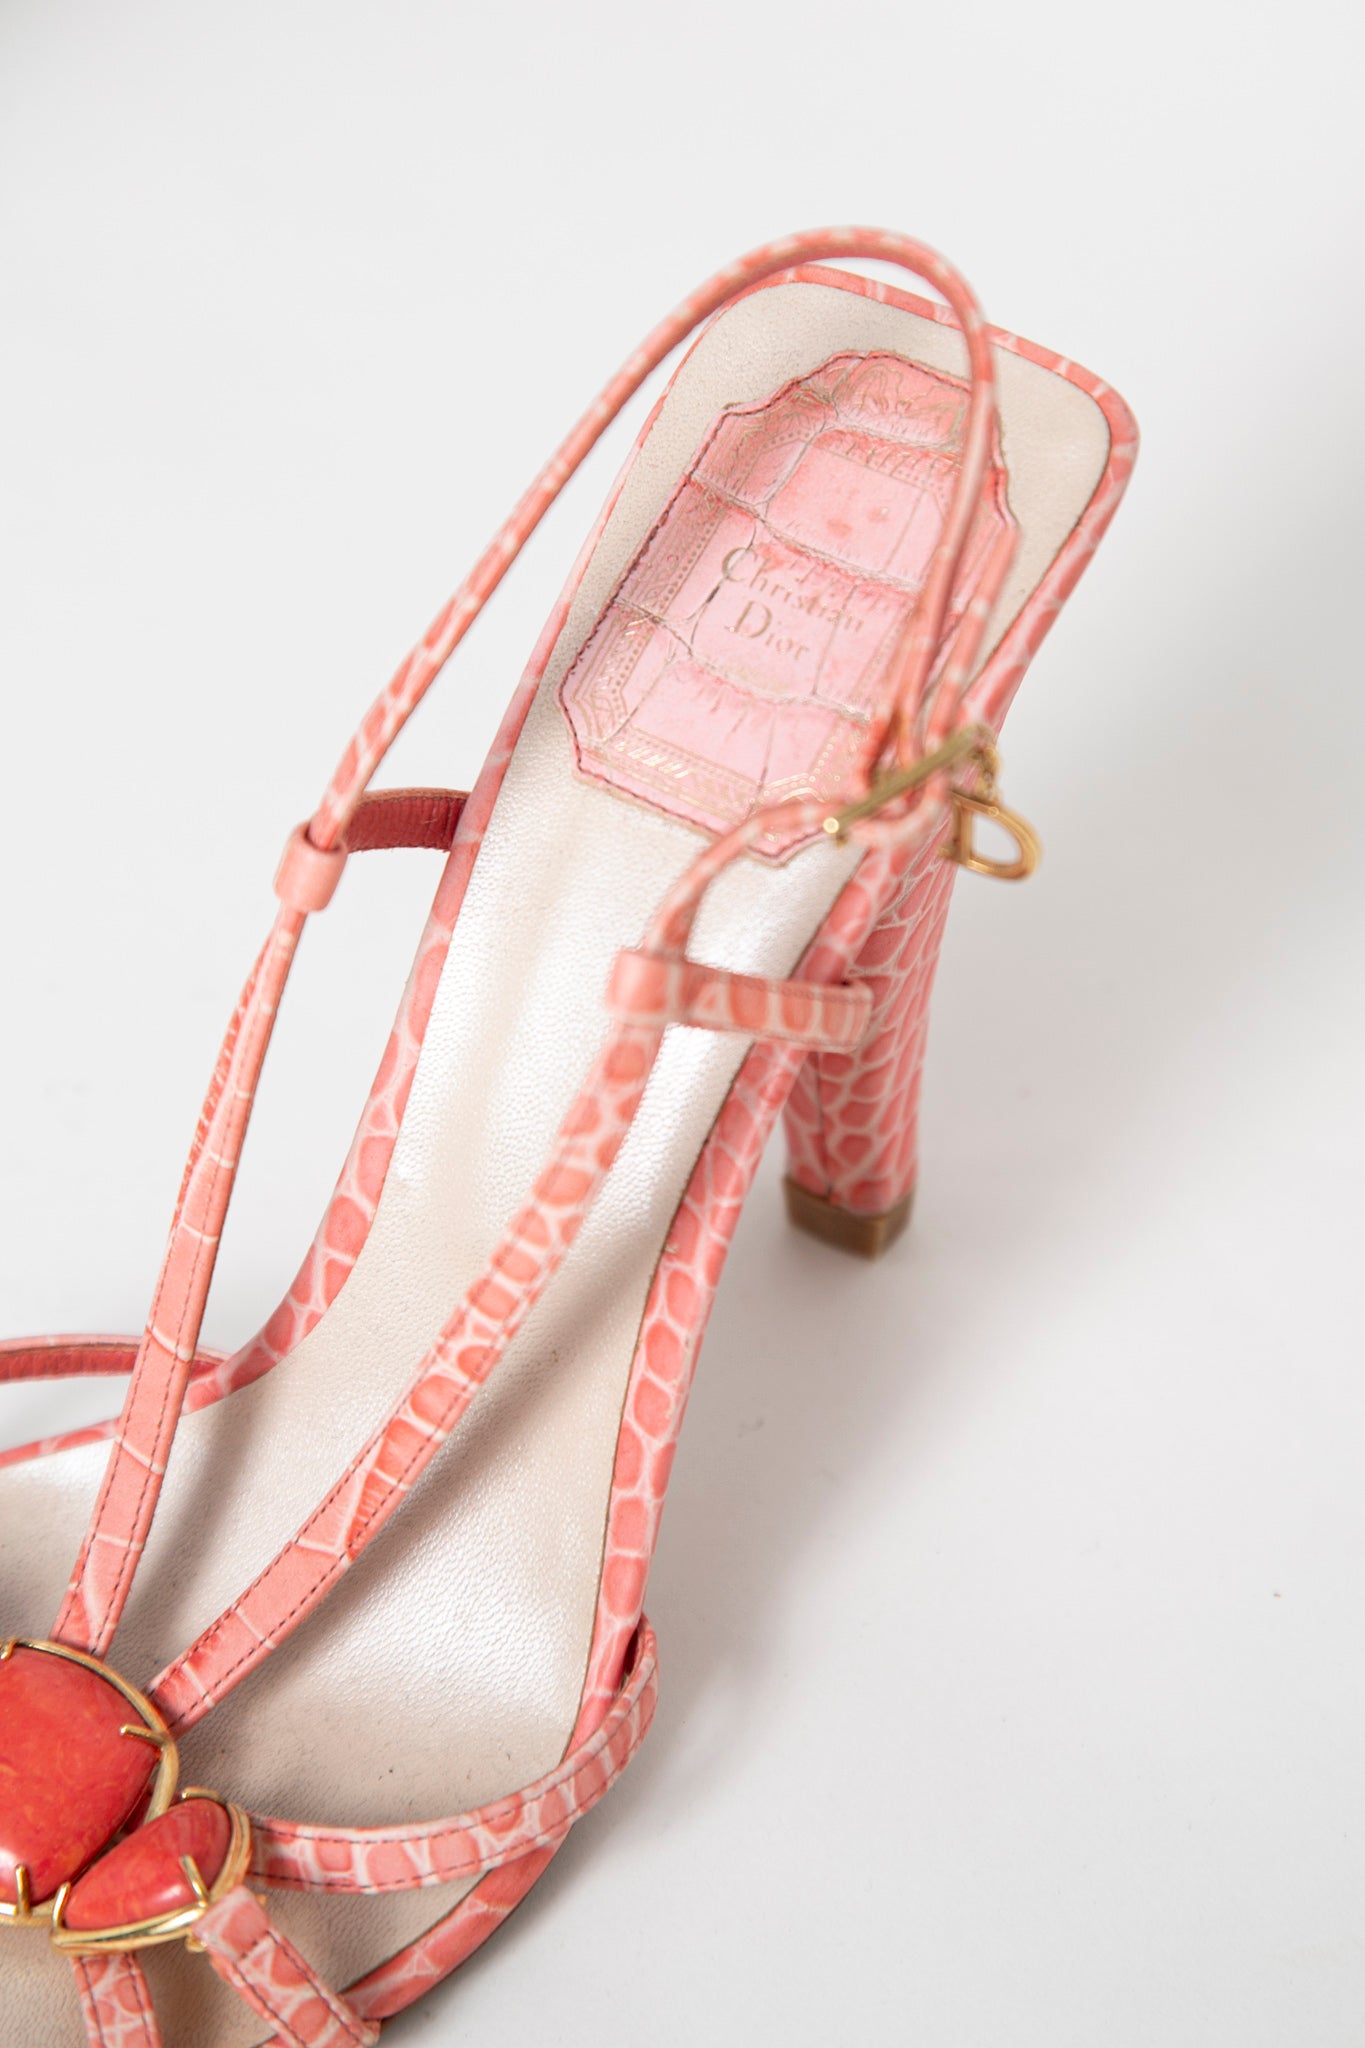 Dior Pink Piedra Sandals